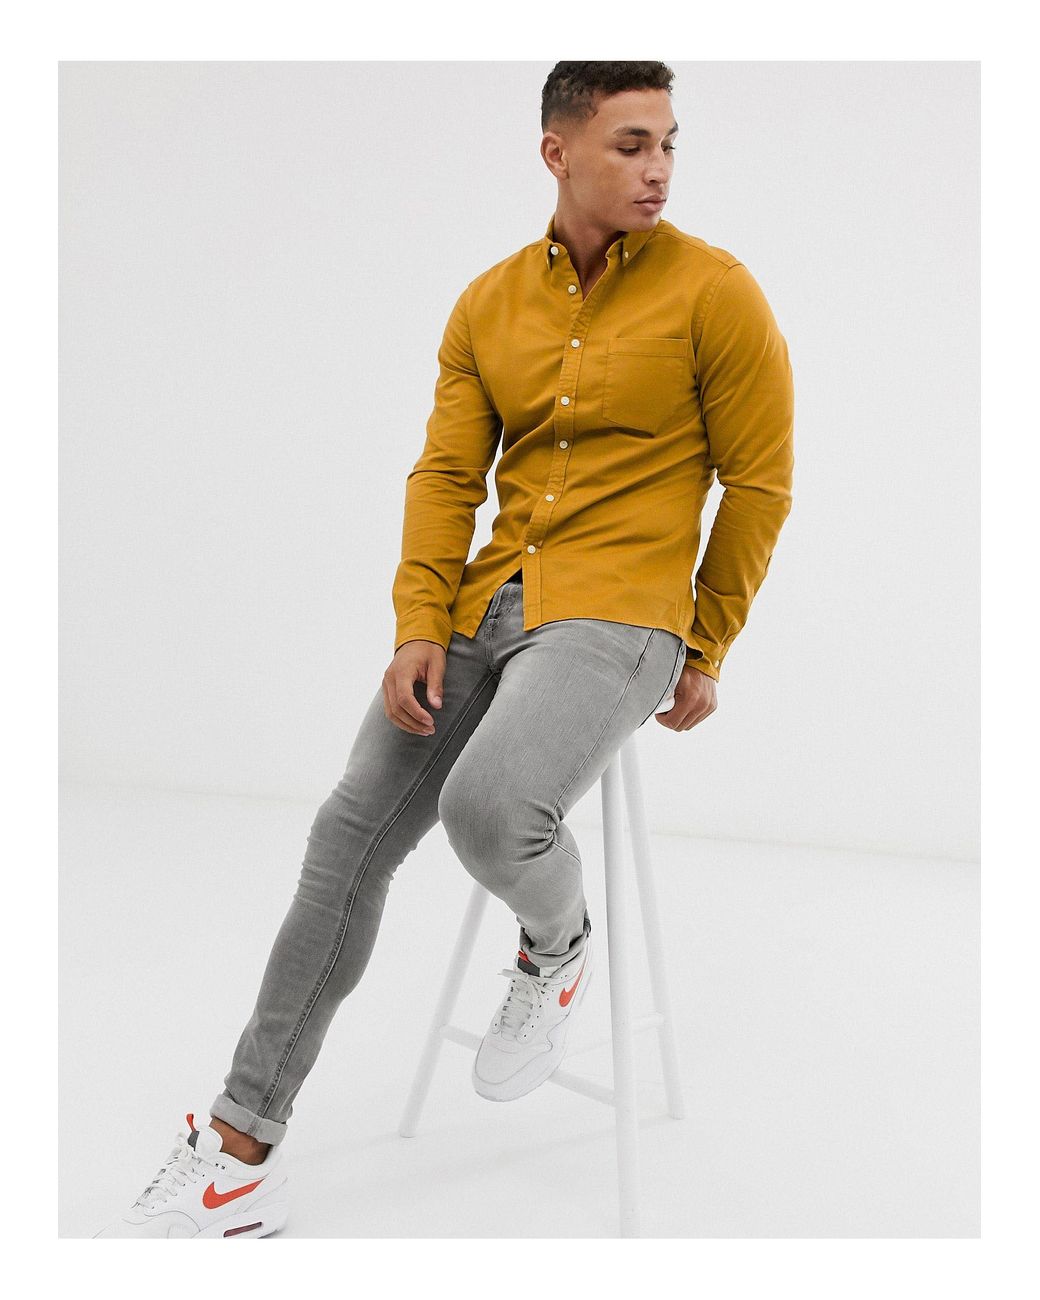 Buy Mustard Shirts for Men by MAX Online  Ajiocom